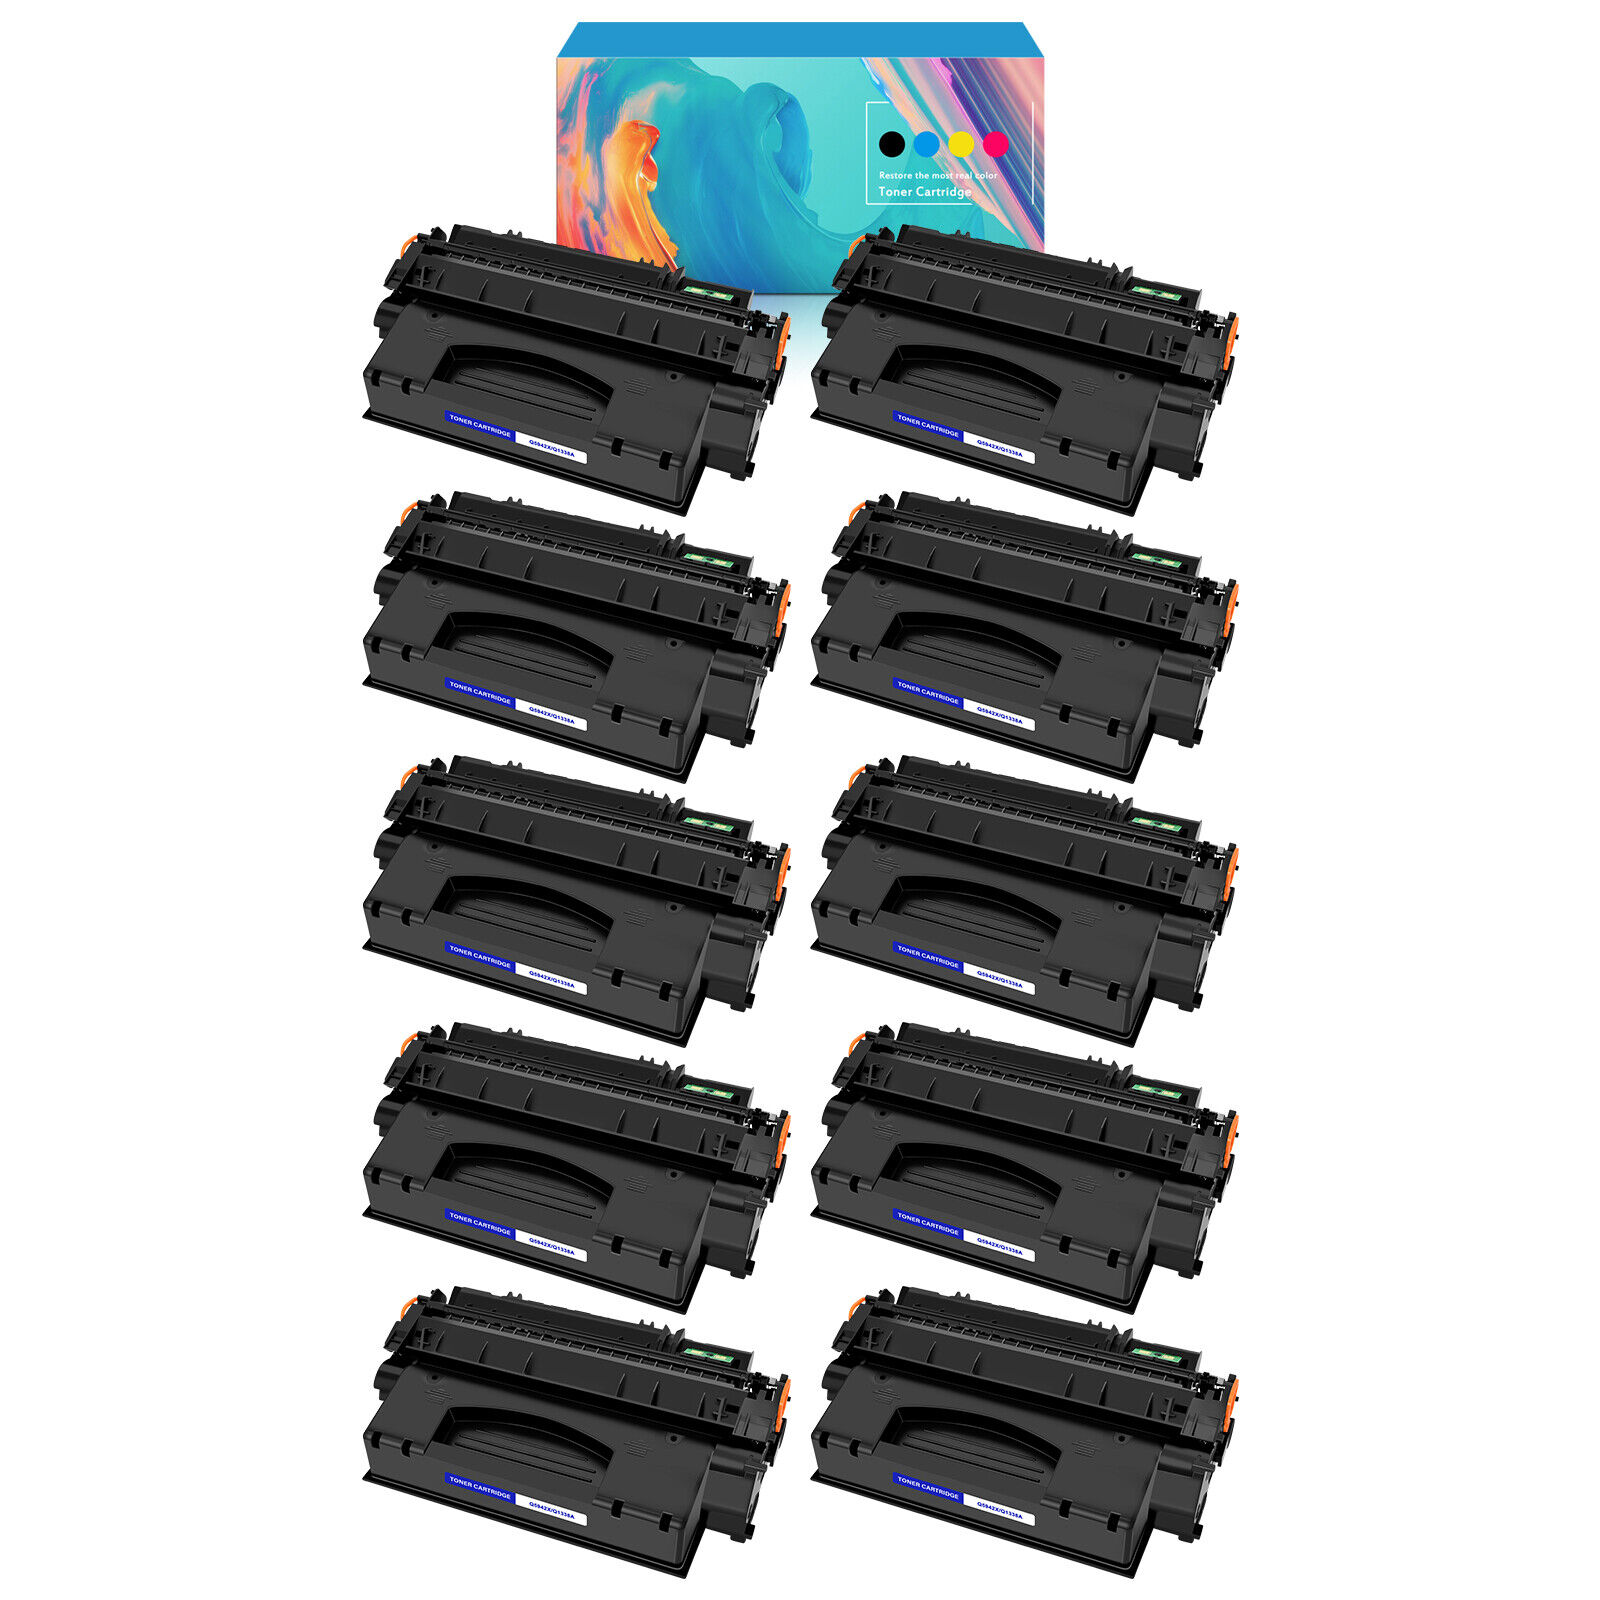 10PK Black Q5942X 42X Toner for HP LaserJet 4250 4250n 4200 4200n 4350 4350